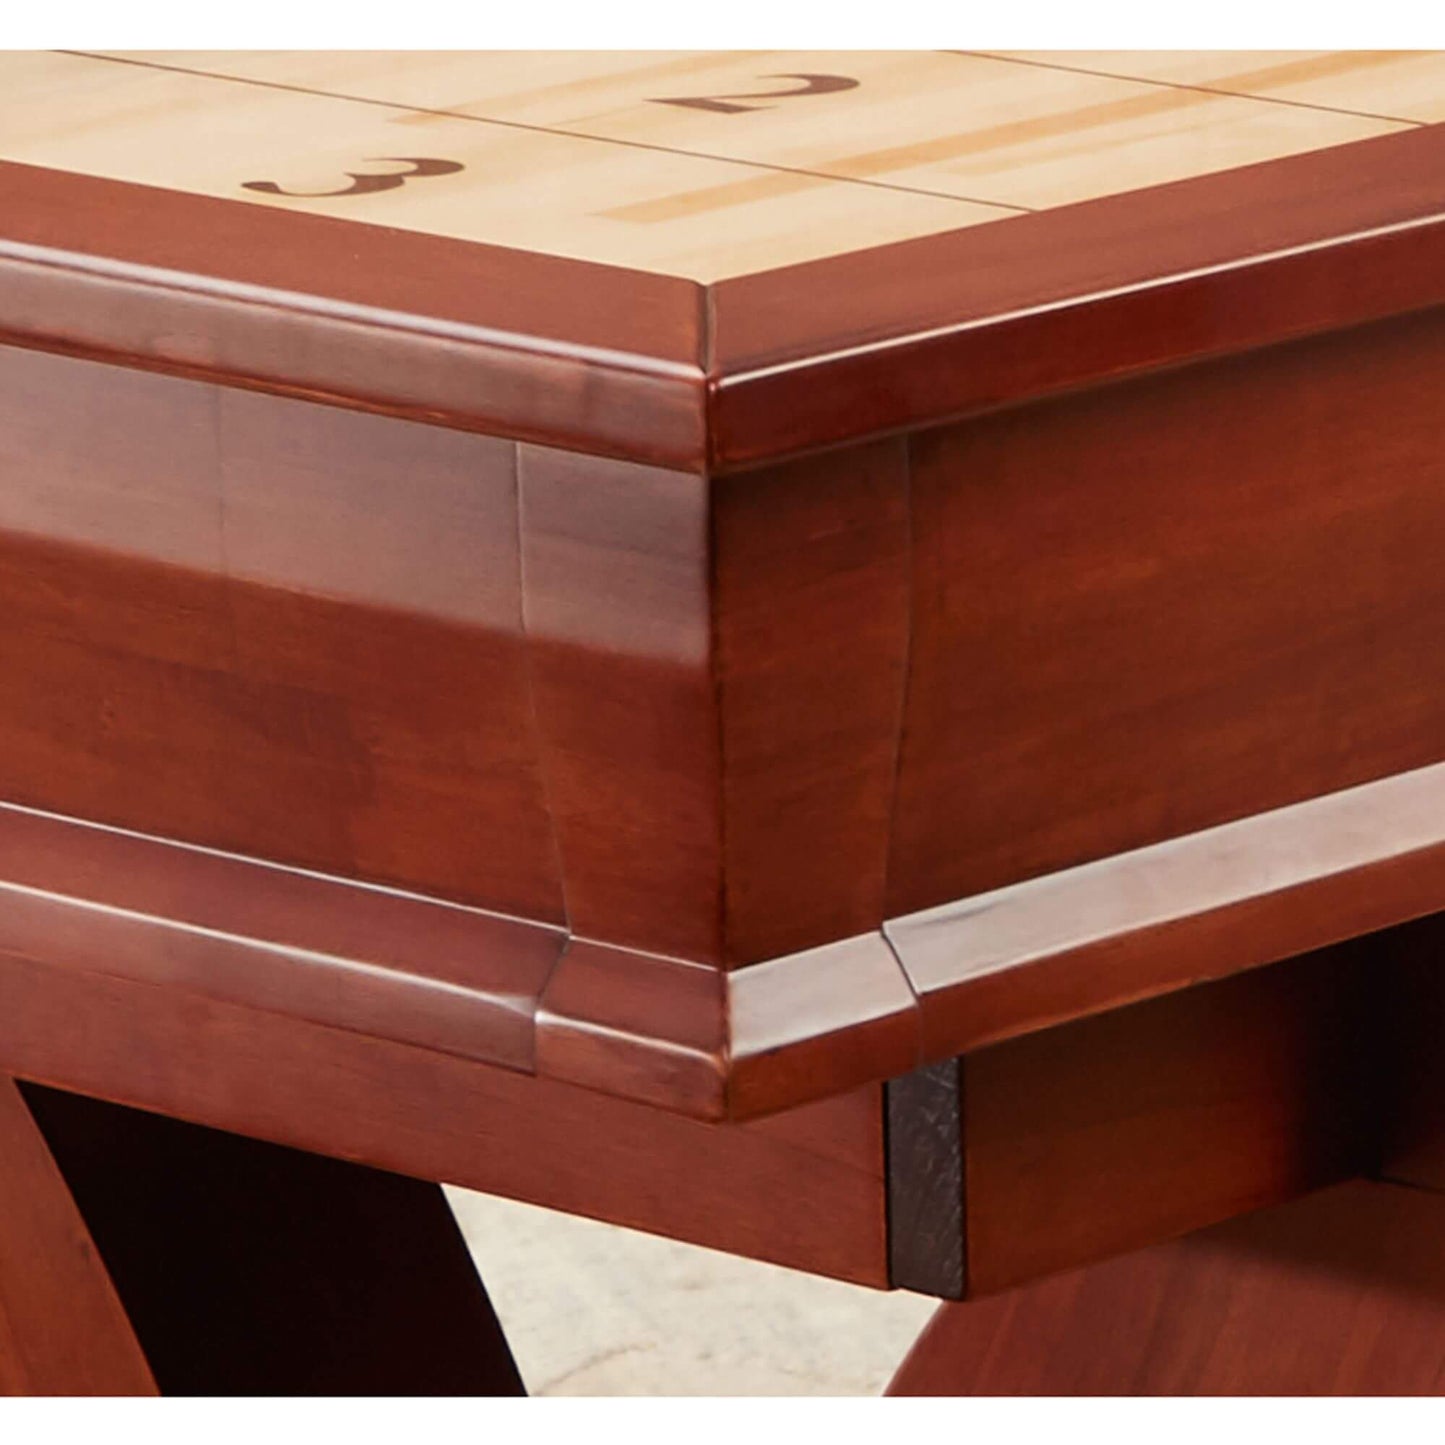 Playcraft Columbia River Pro-Series Shuffleboard Table - Upper Livin